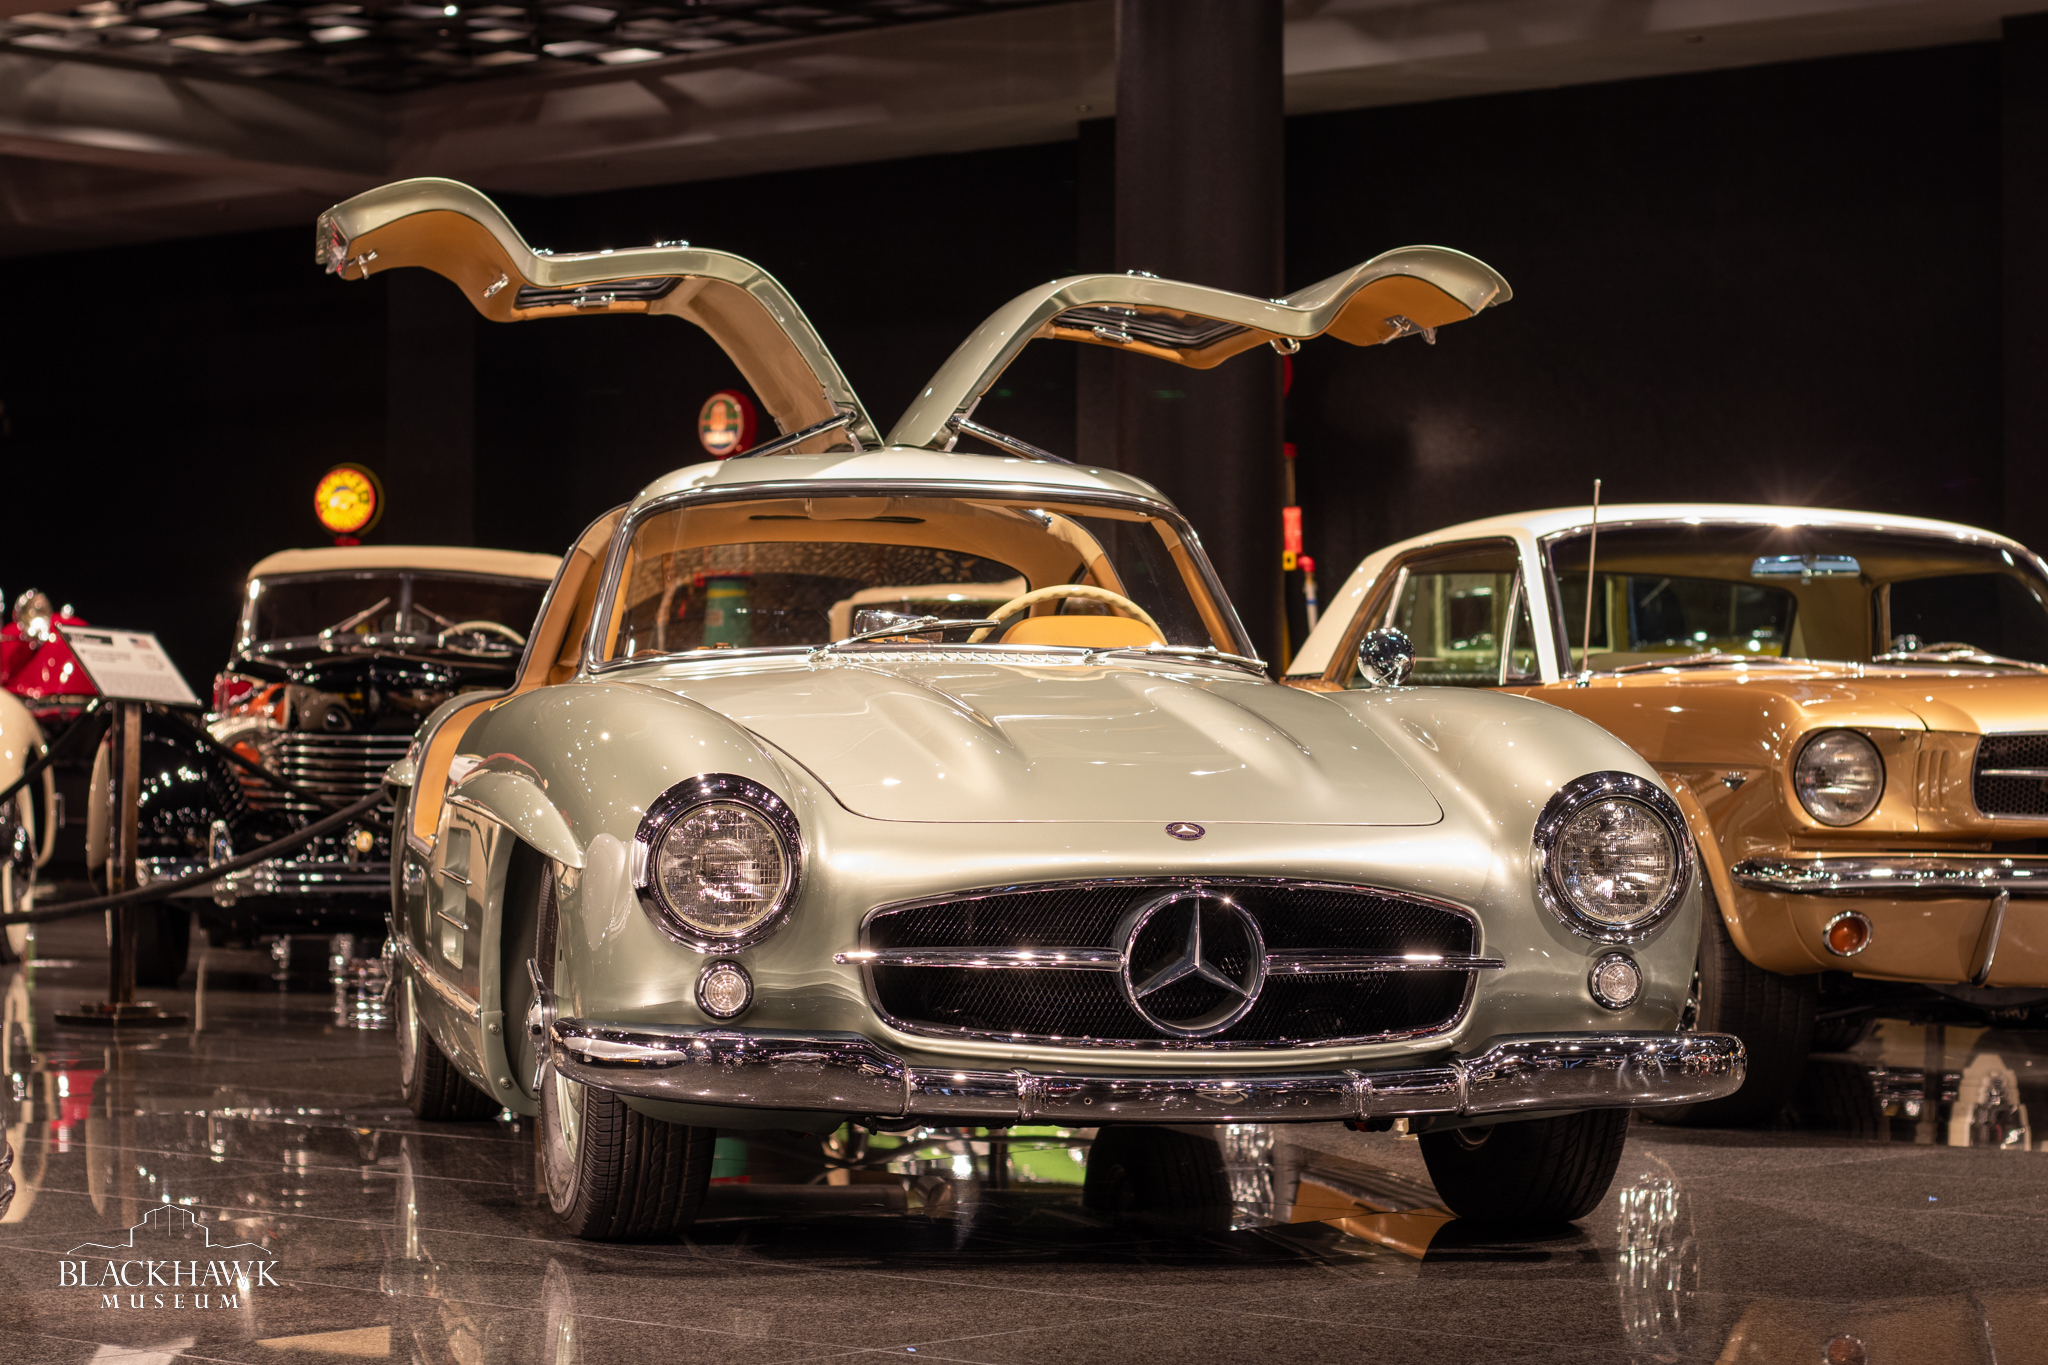 Blackhawk Museum Classic Car Collection Mercedes-Benz 300SL